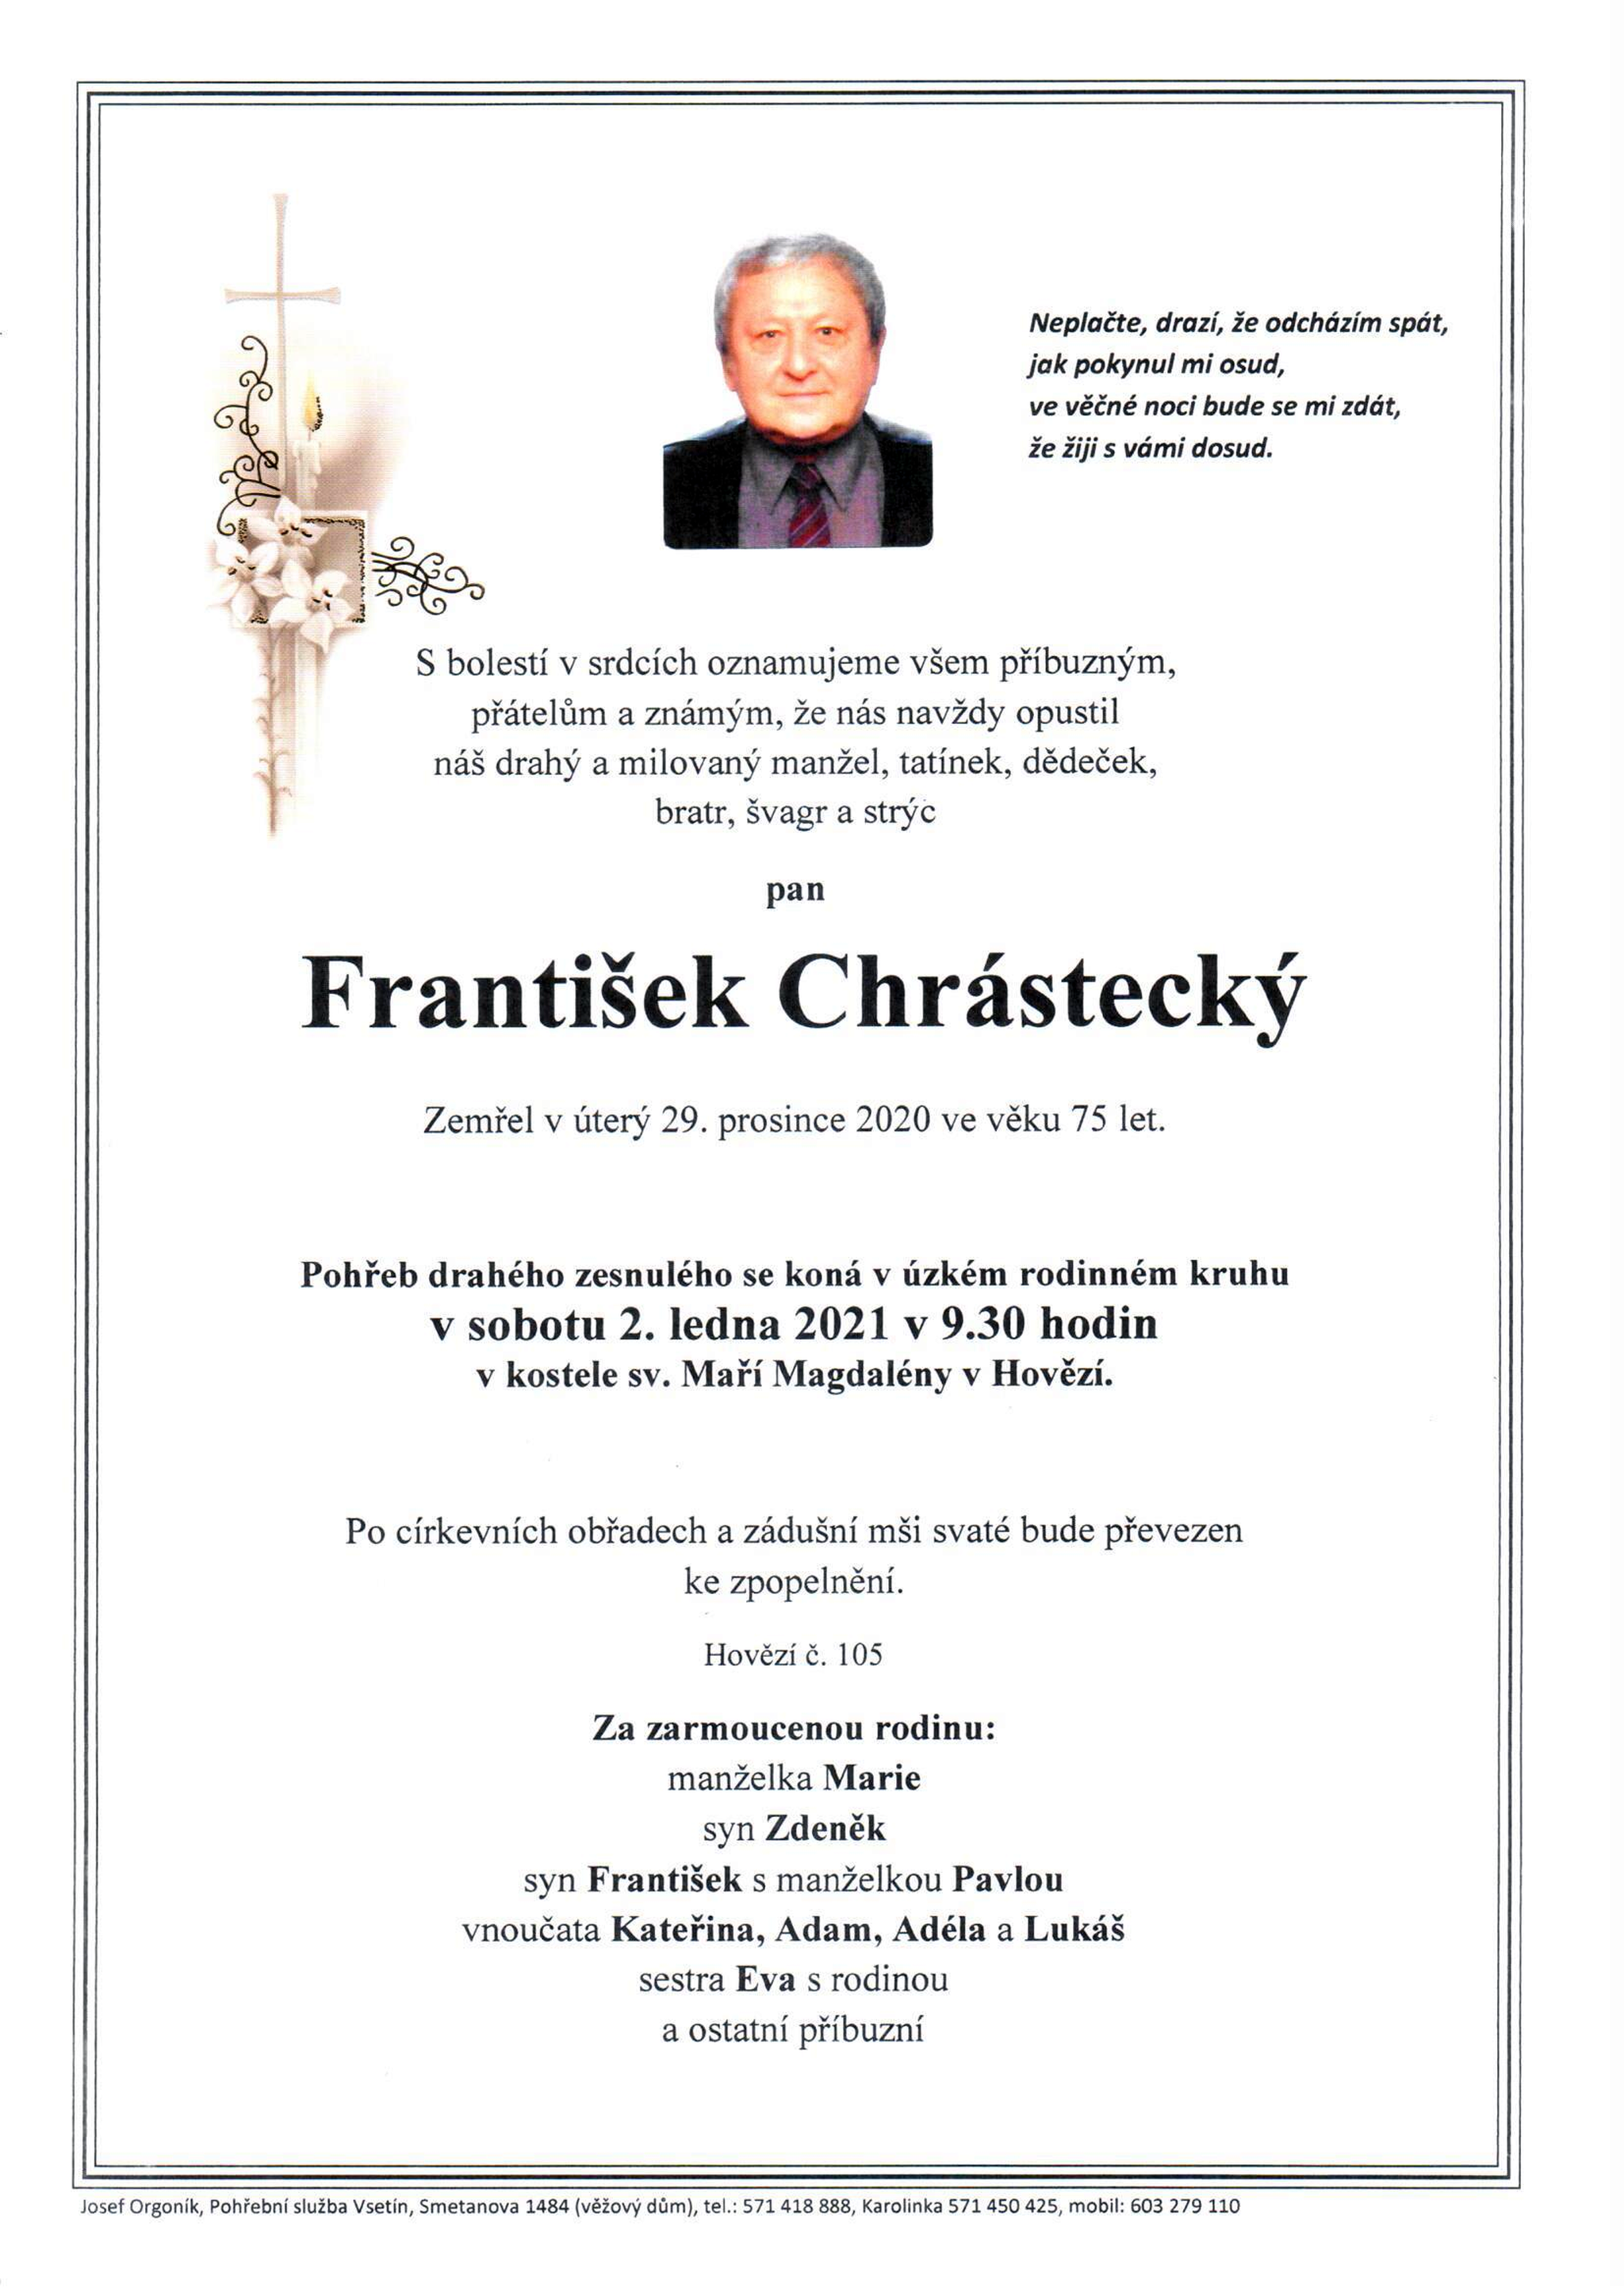 František Chrástecký